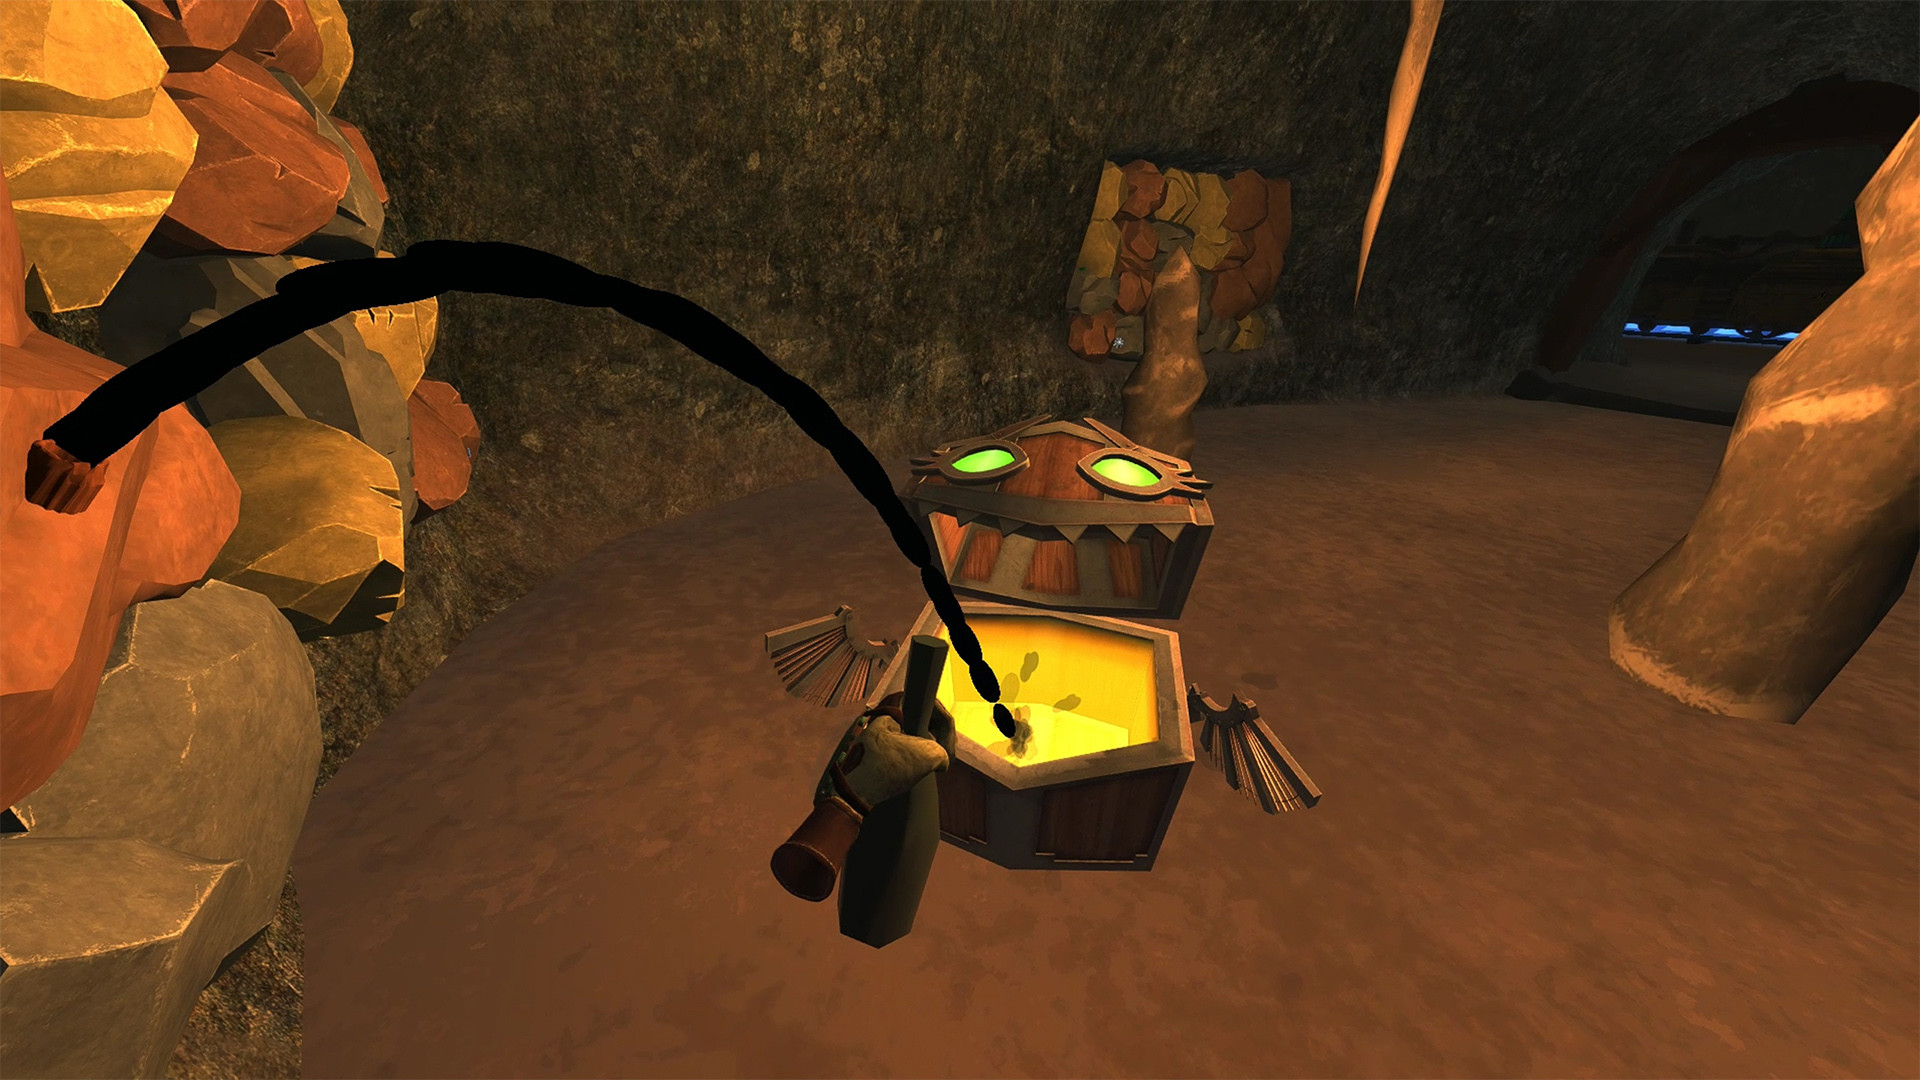 Cave Digger VR Steam CD Key